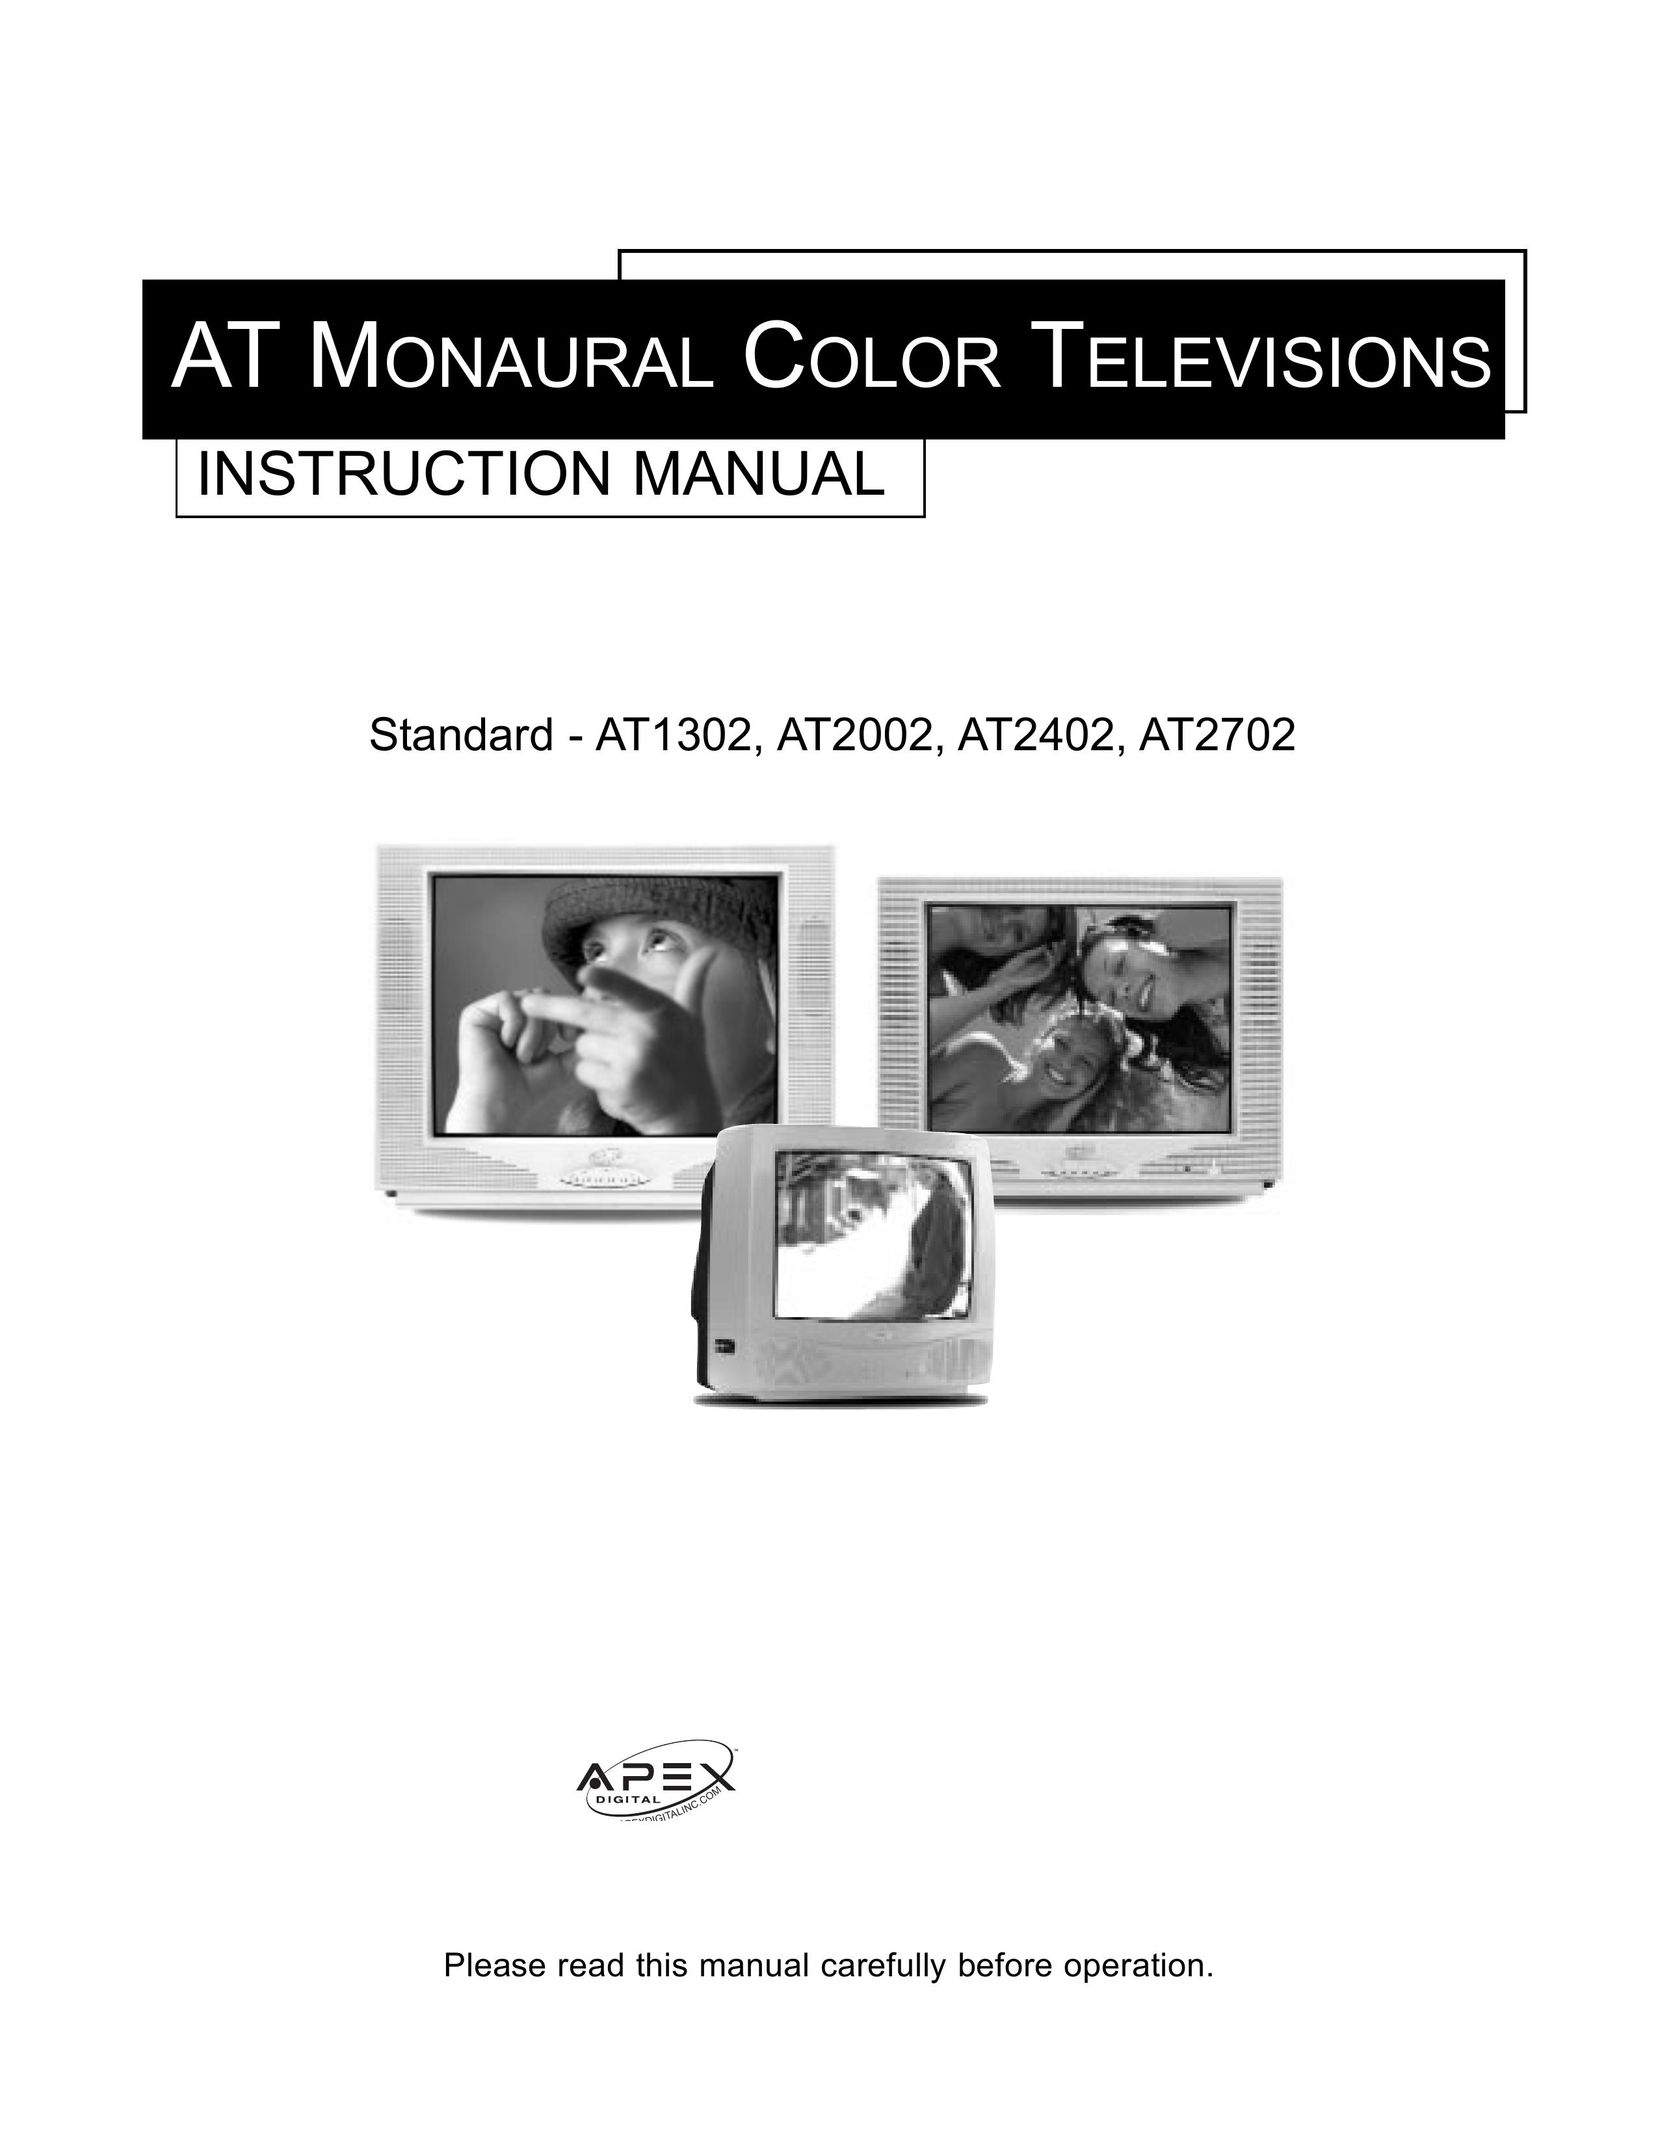 Apex Digital AT2402 Flat Panel Television User Manual (Page 1)